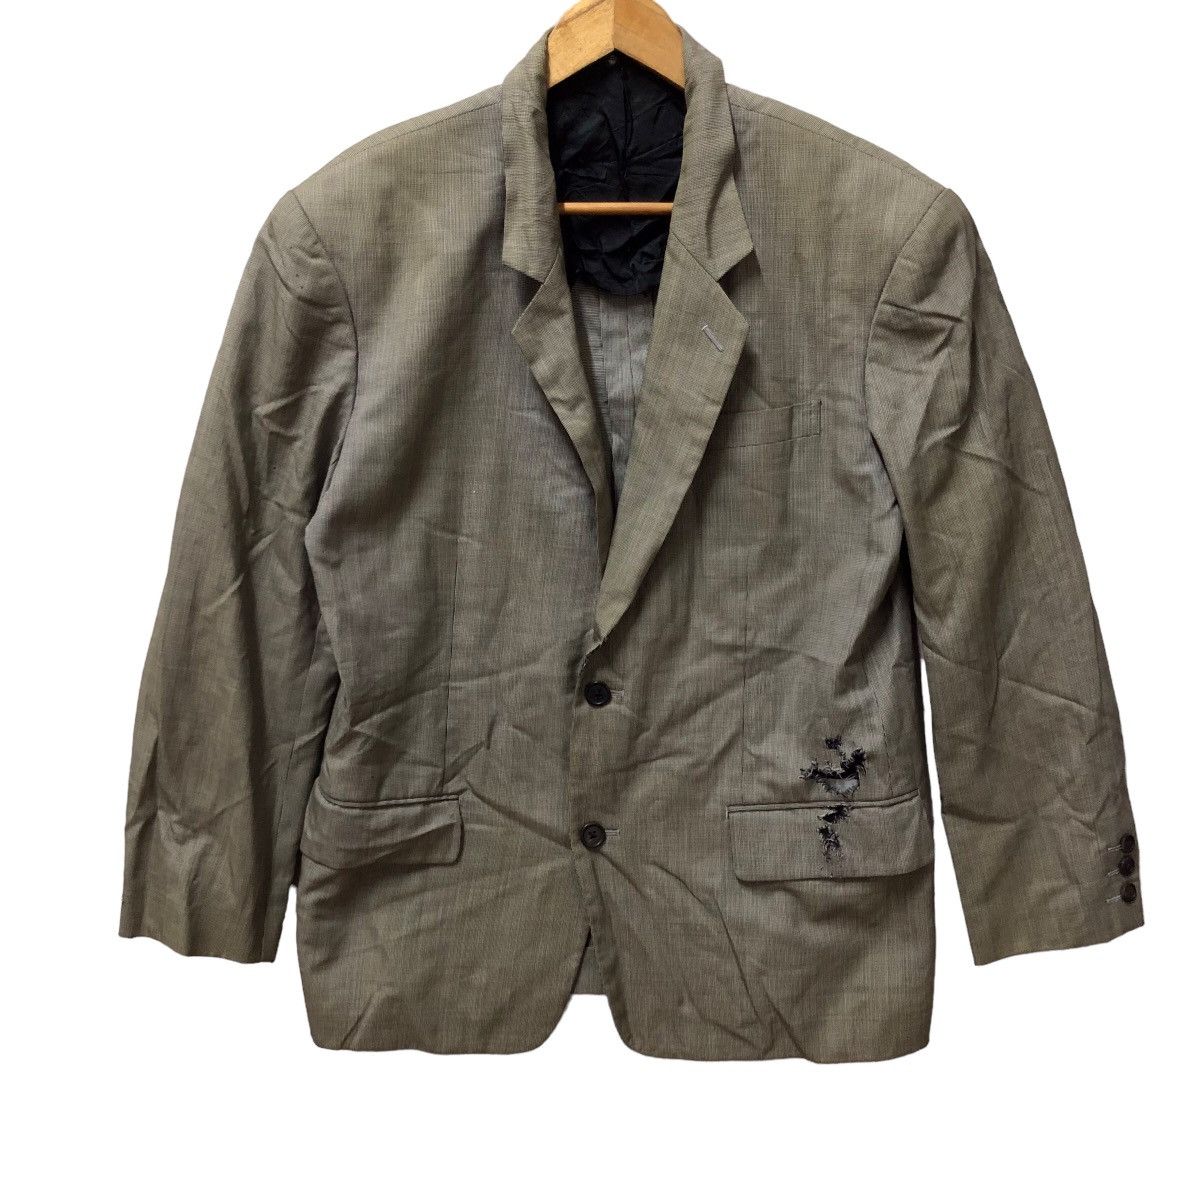 Vintage y’s for men distrested wool suit jacket - 1